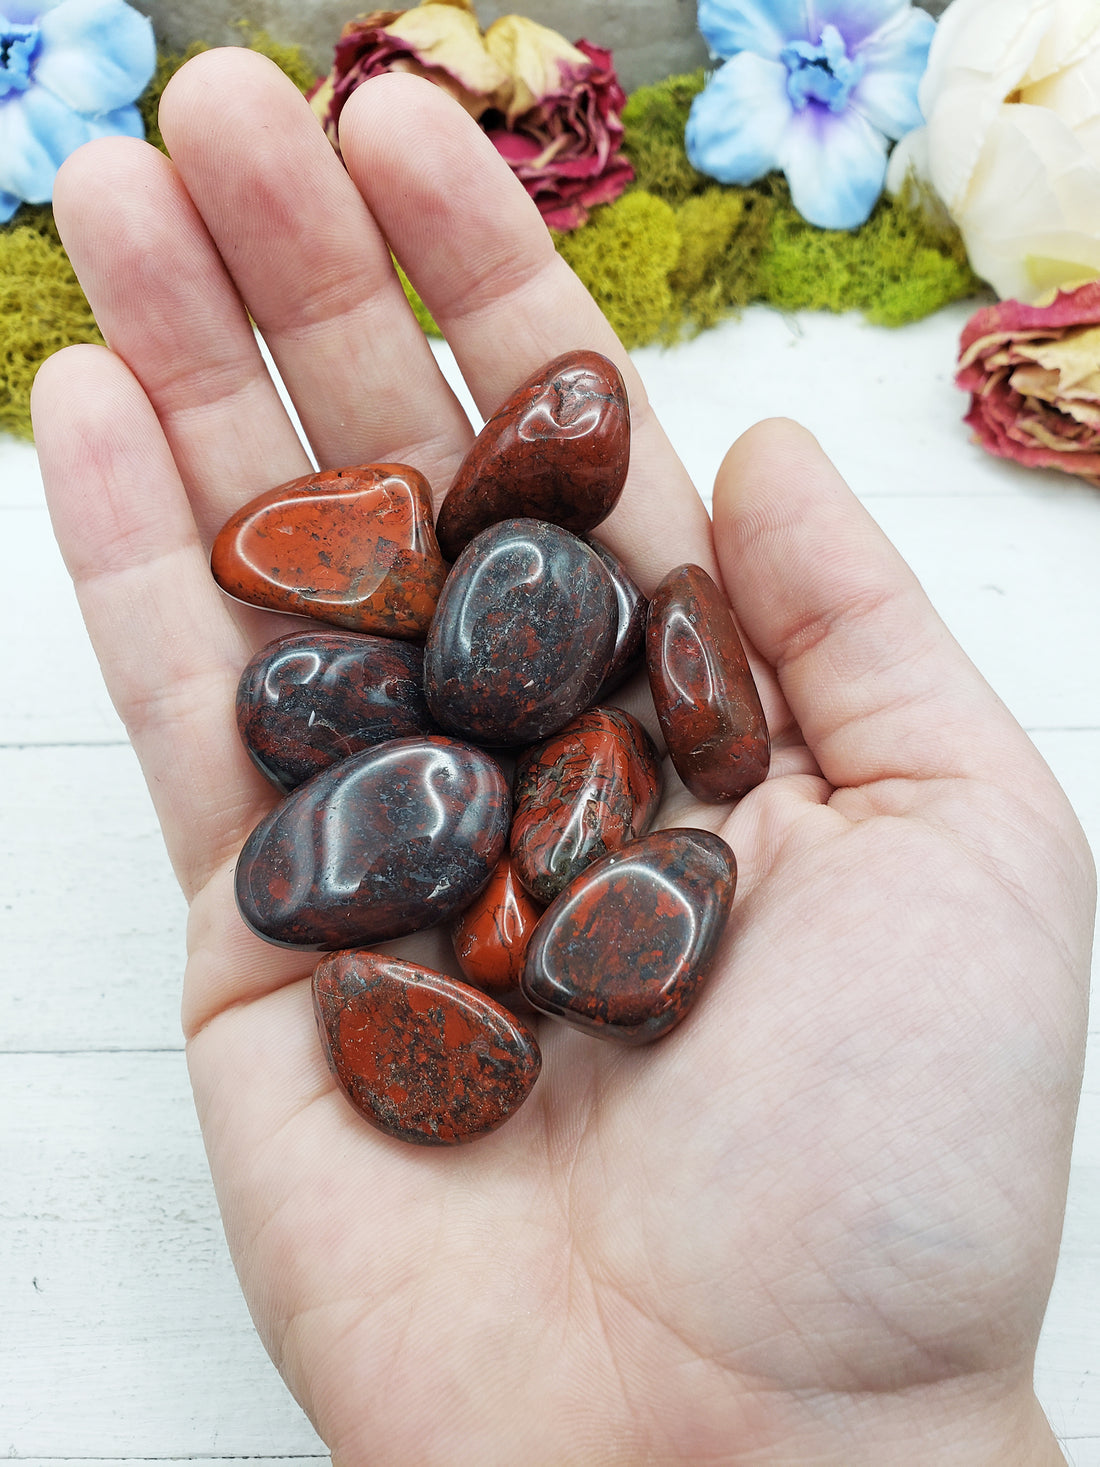 Brecciated Jasper stones in hand